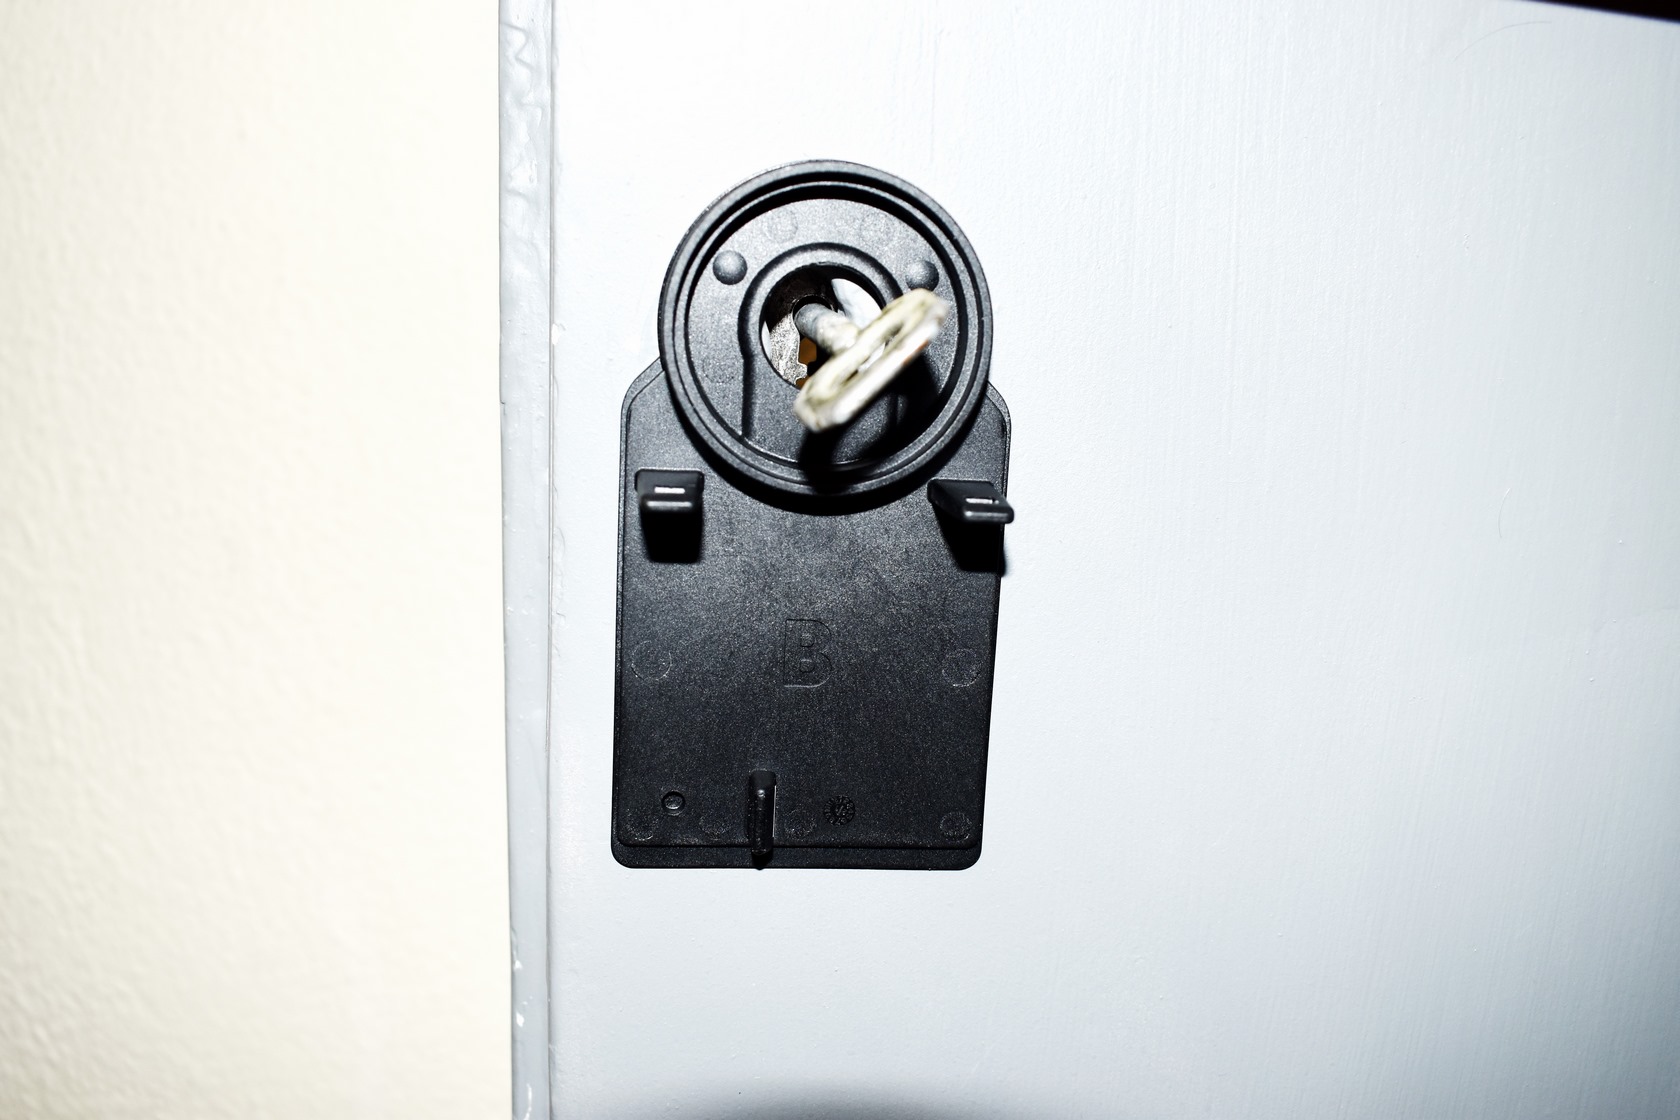 Nuki Smart Lock 3.0 electronic door lock helps anyone simplify